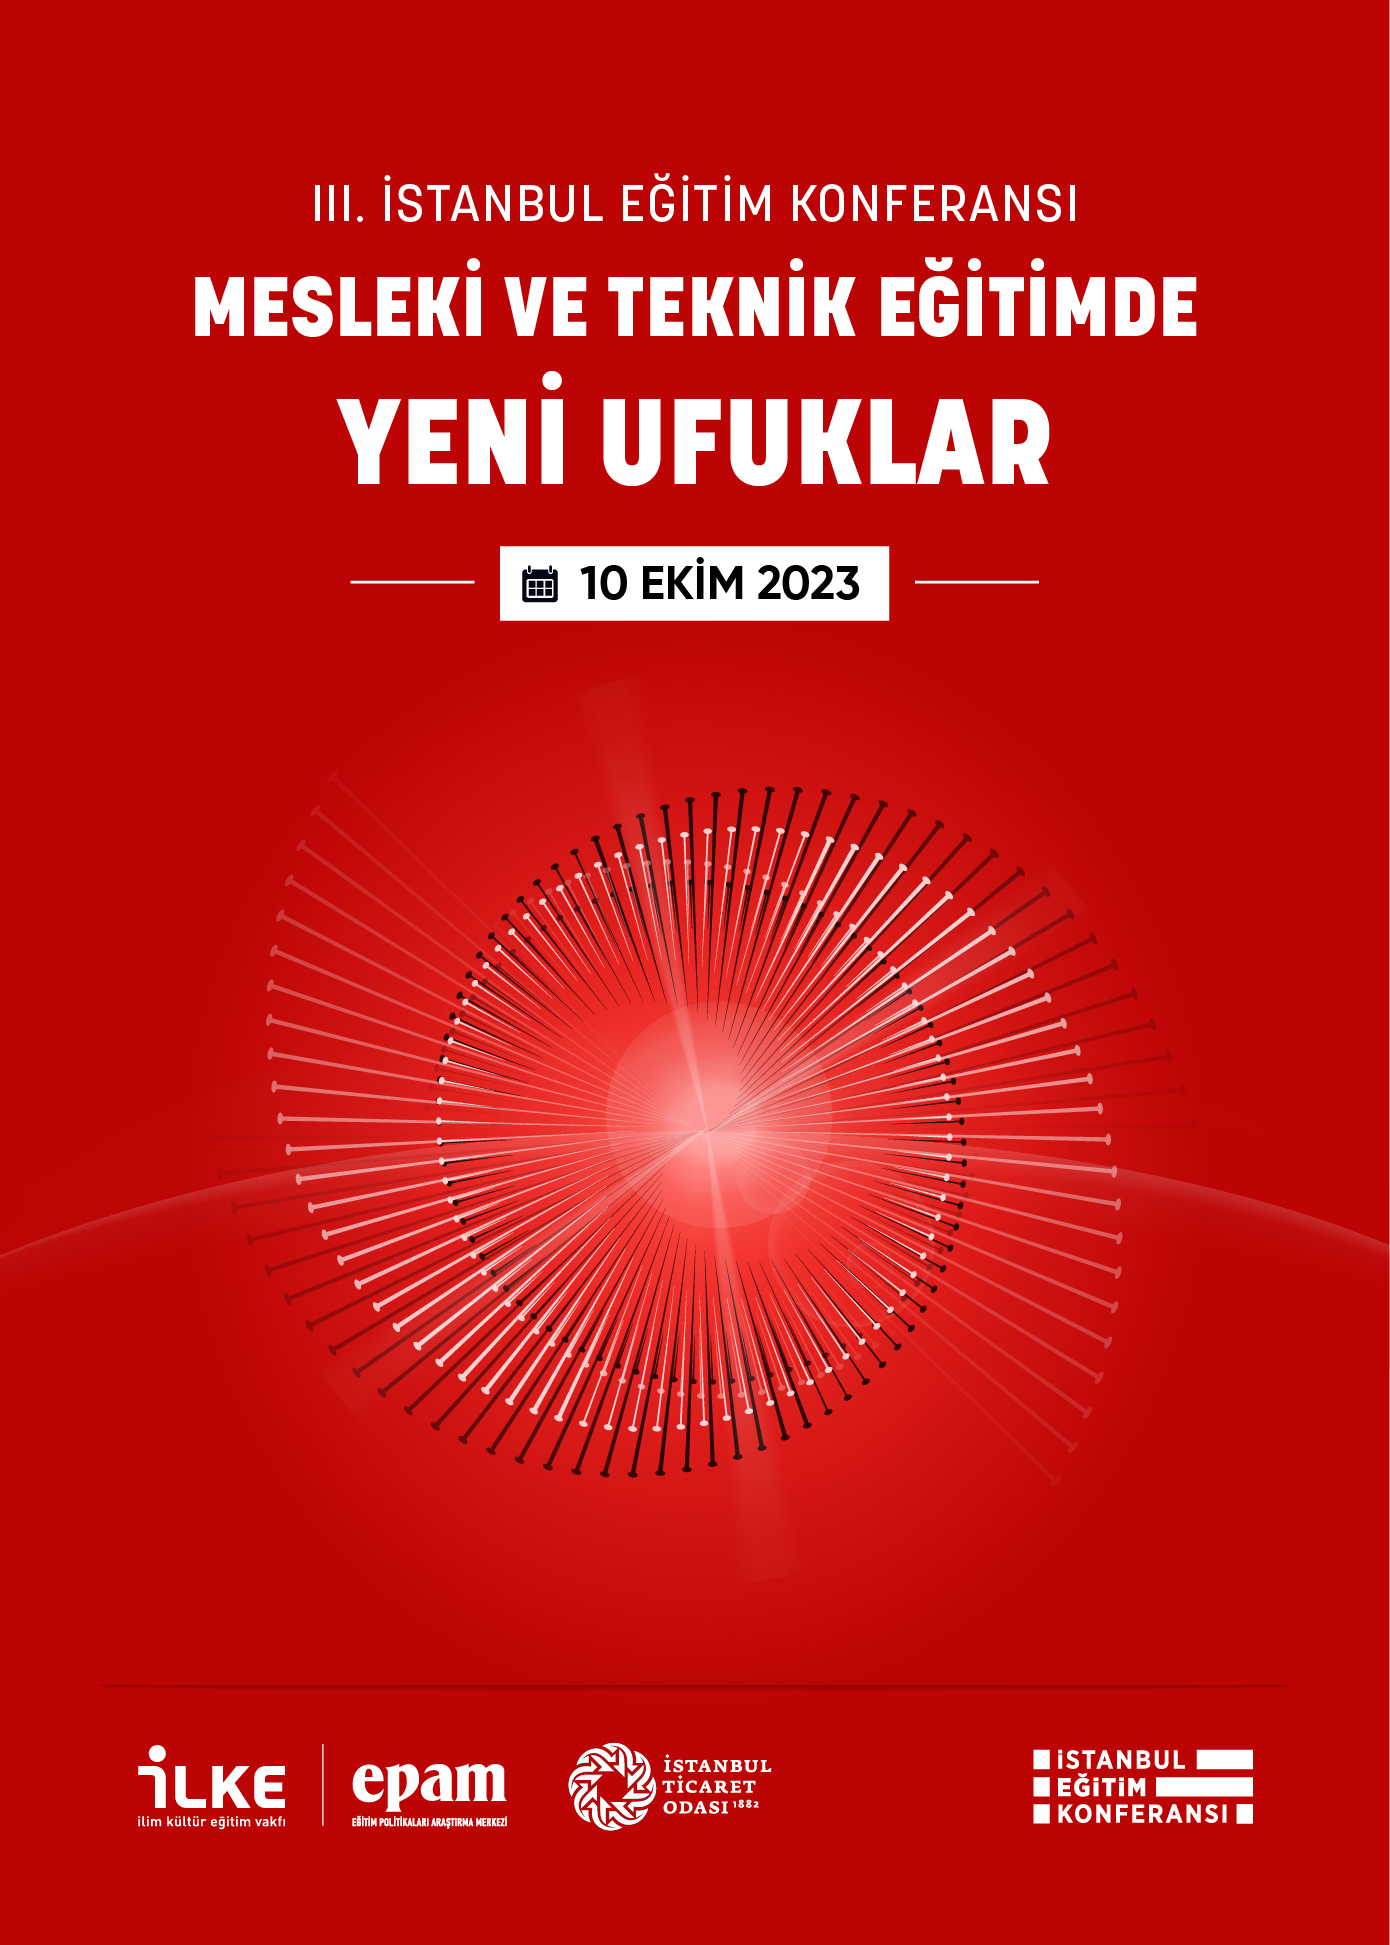 III. İstanbul Eğitim Konferansı